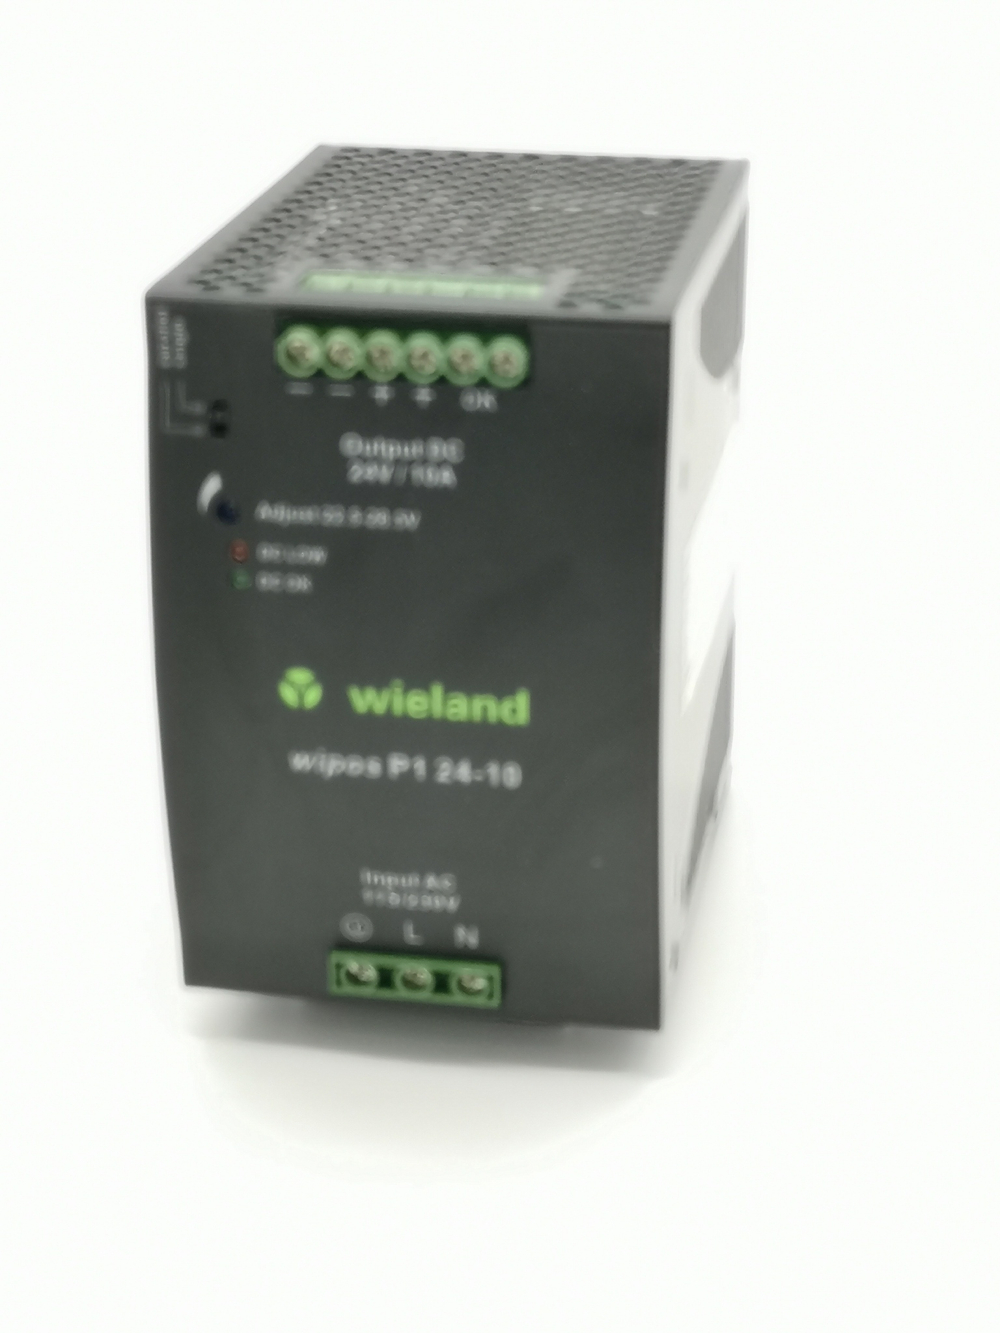 Блок питания Wieland WIPOS P1 24-10 24В 10А AC/DC